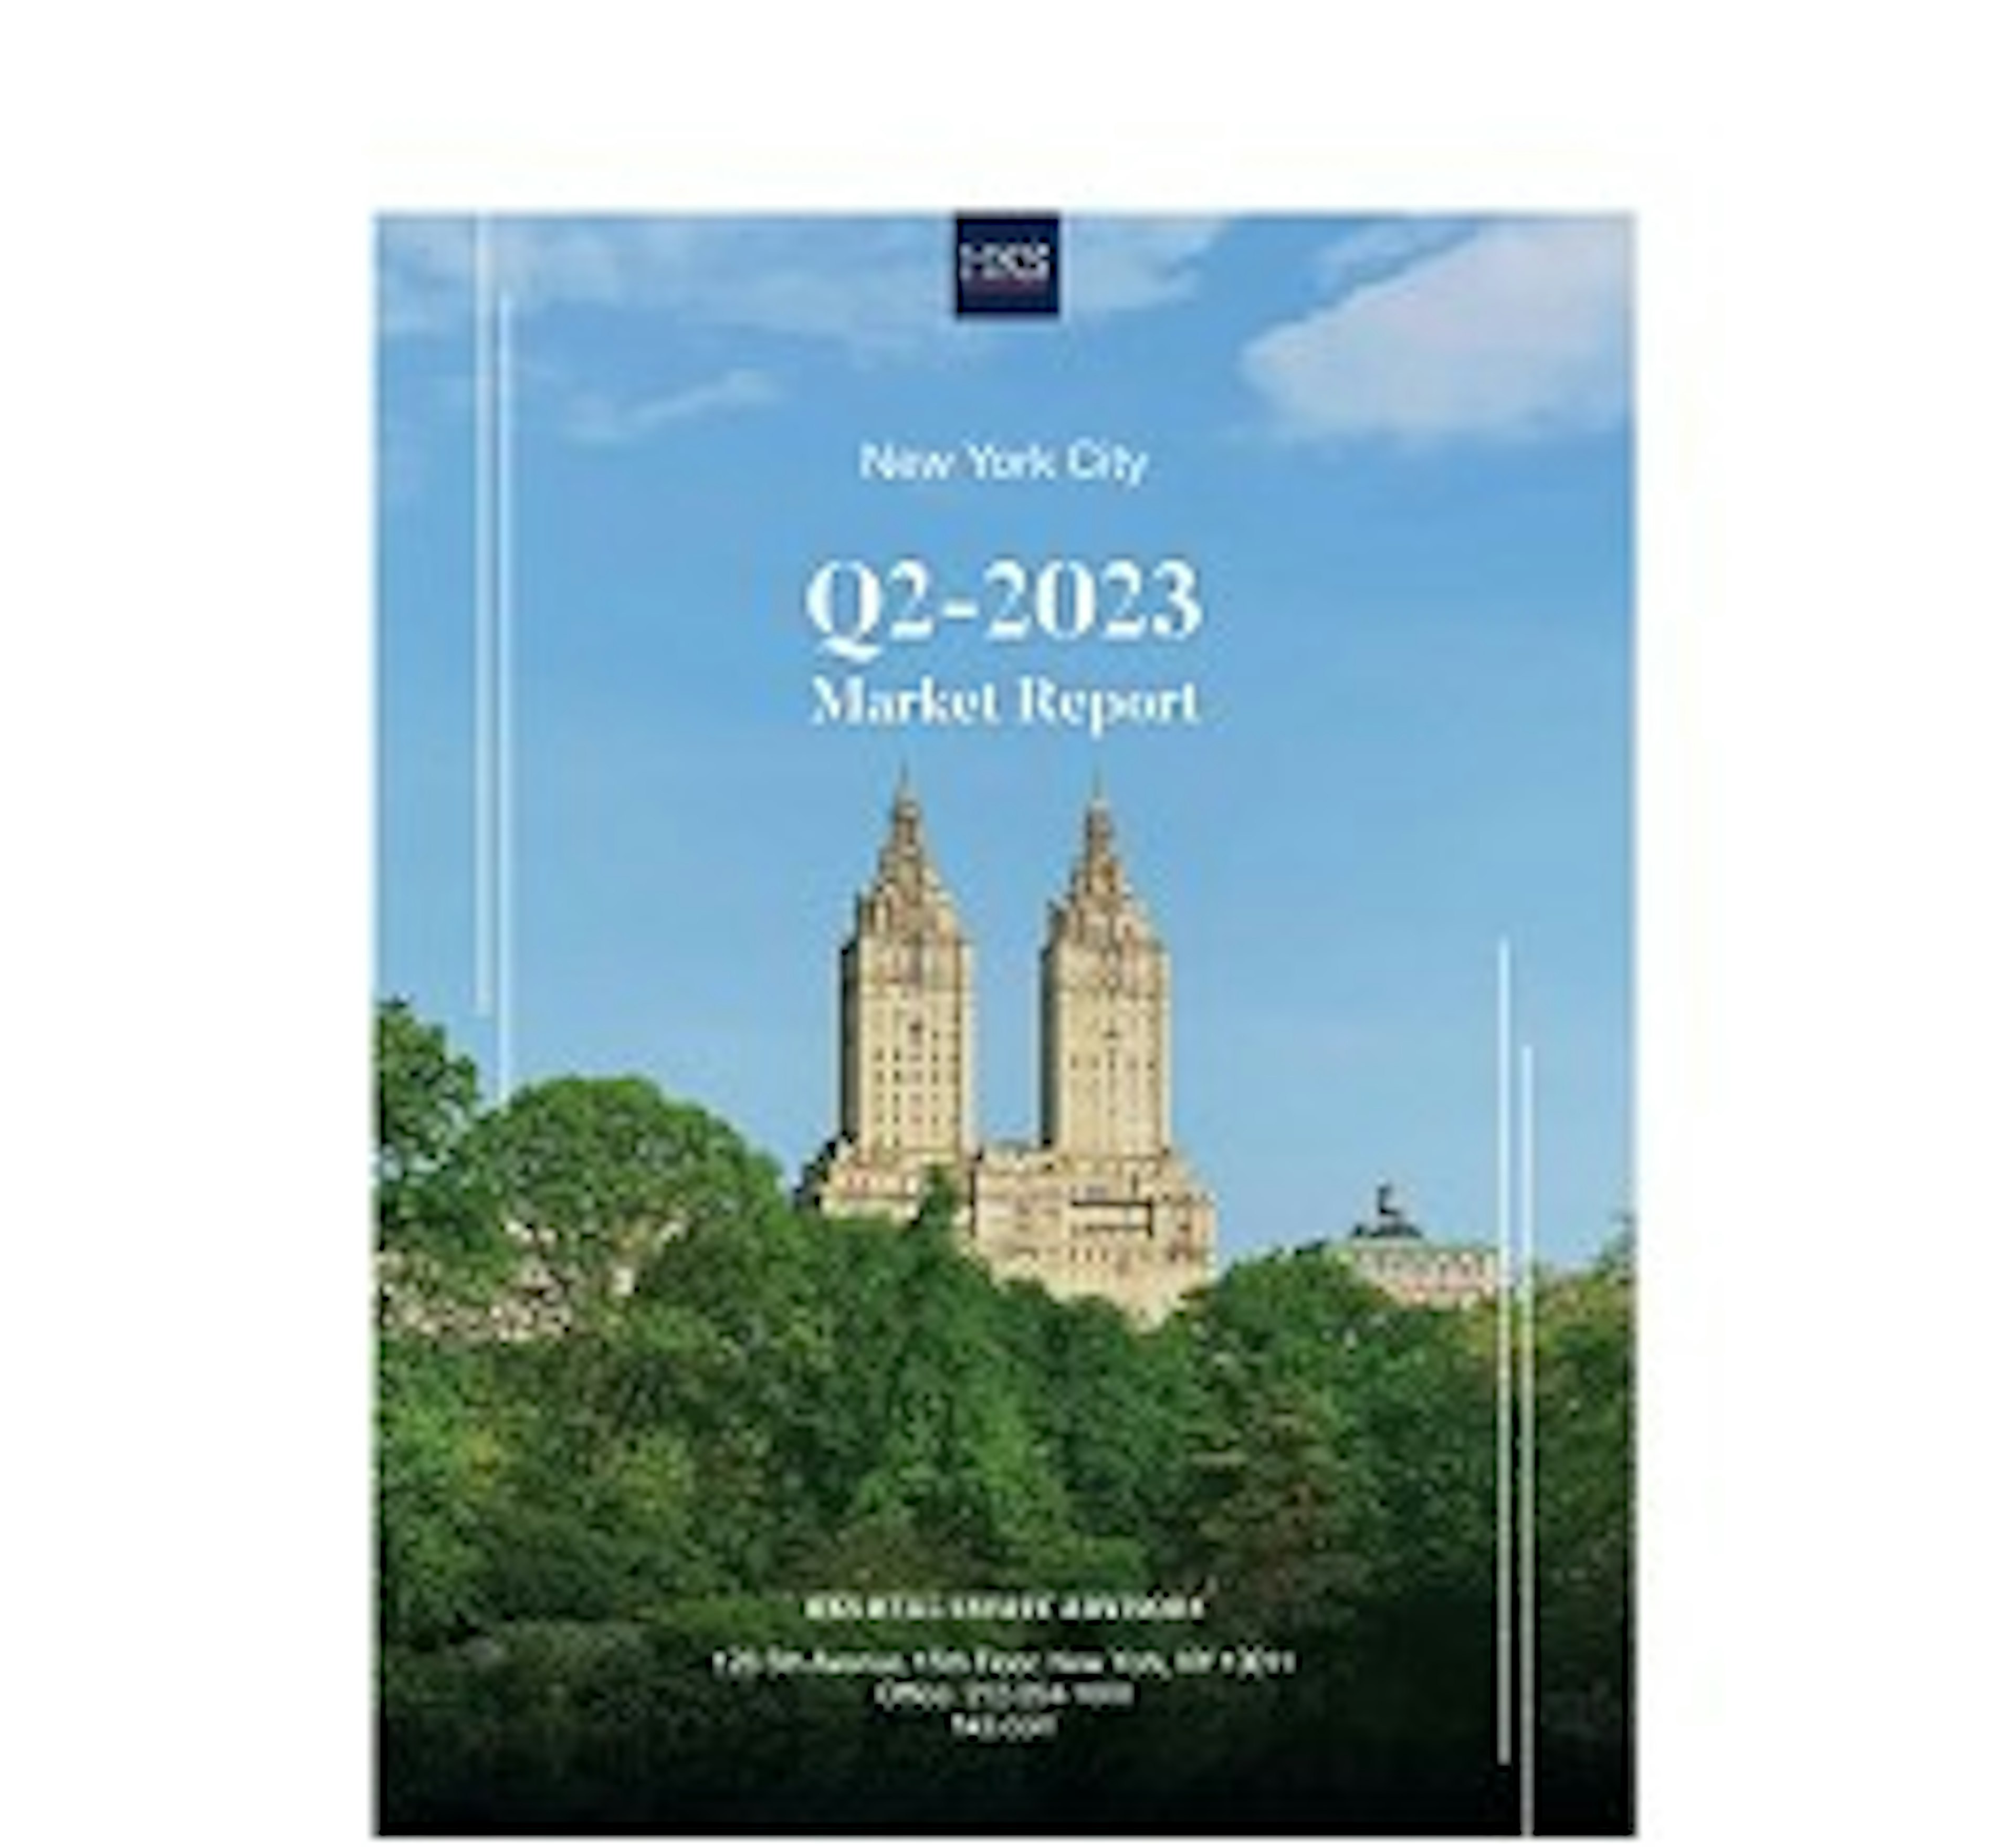 NEW YORK CITY / Q2 2023 / Market Report